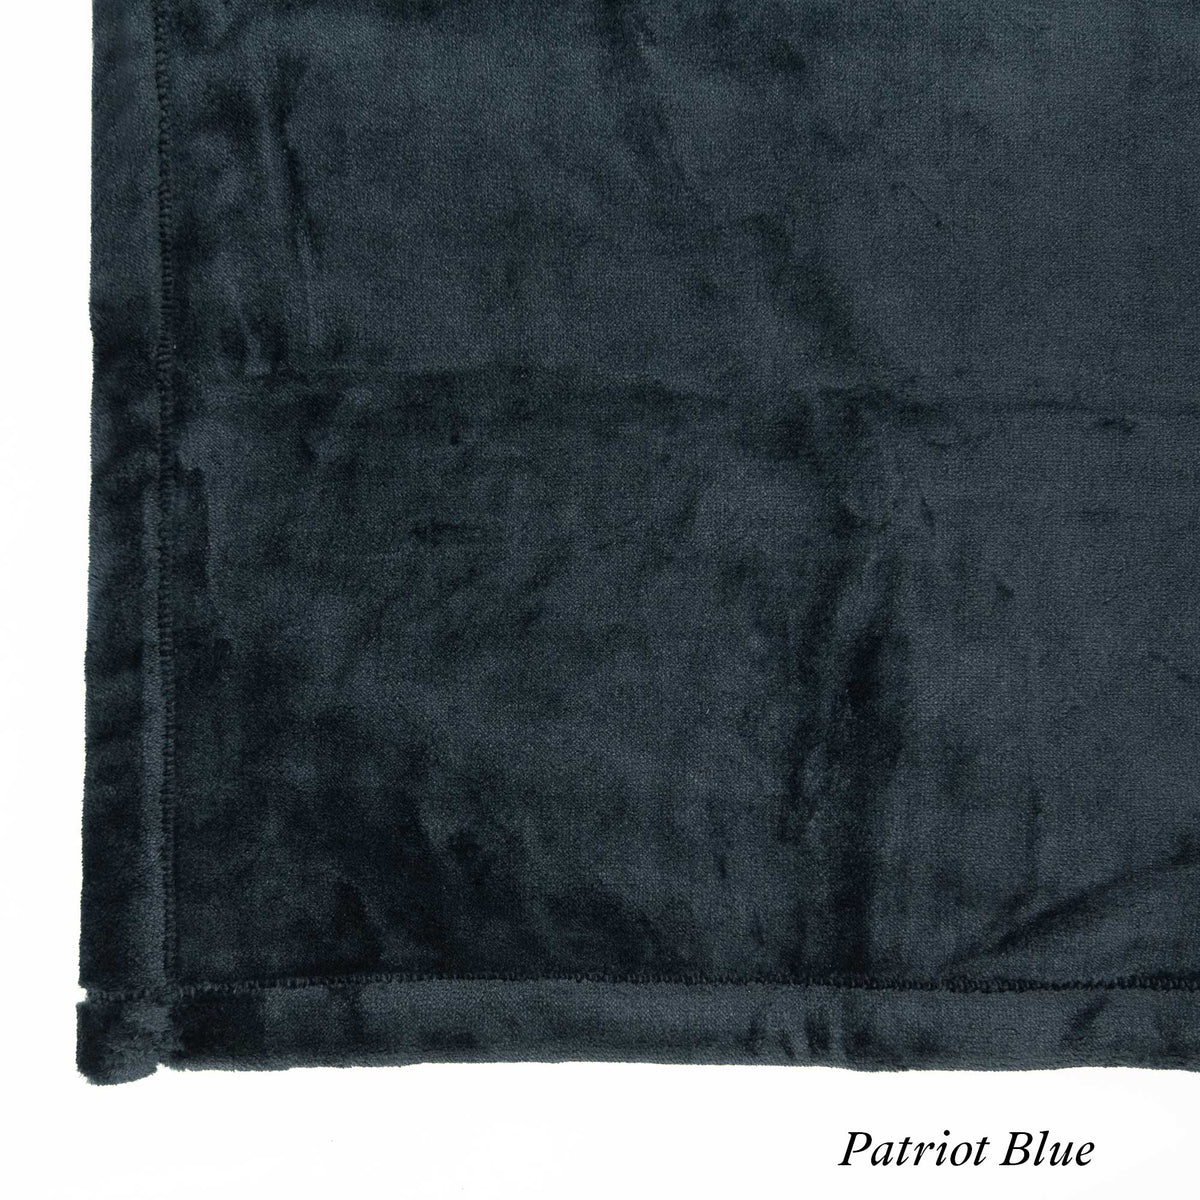 Patriot Blue  Luster Loft Fleece Swatch - Luster Loft Fleece Throw Pillows - American blanket company